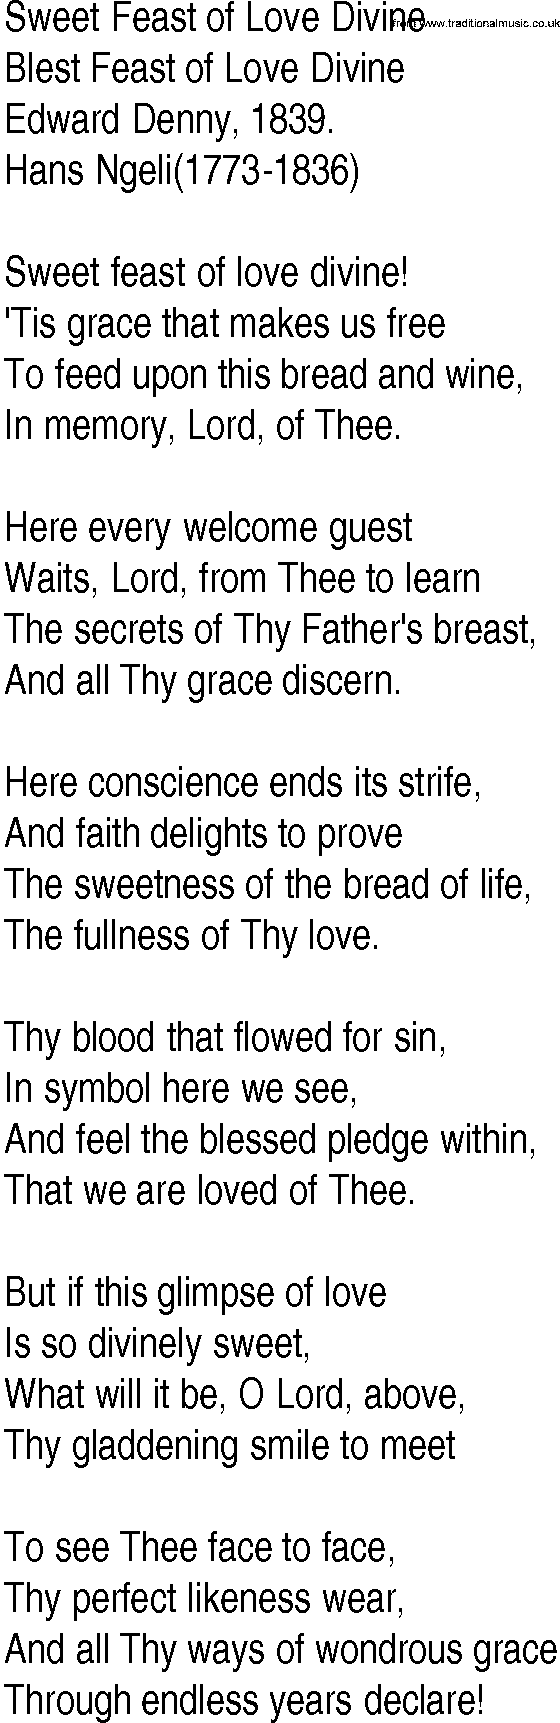 Hymn and Gospel Song: Sweet Feast of Love Divine by Edward Denny lyrics